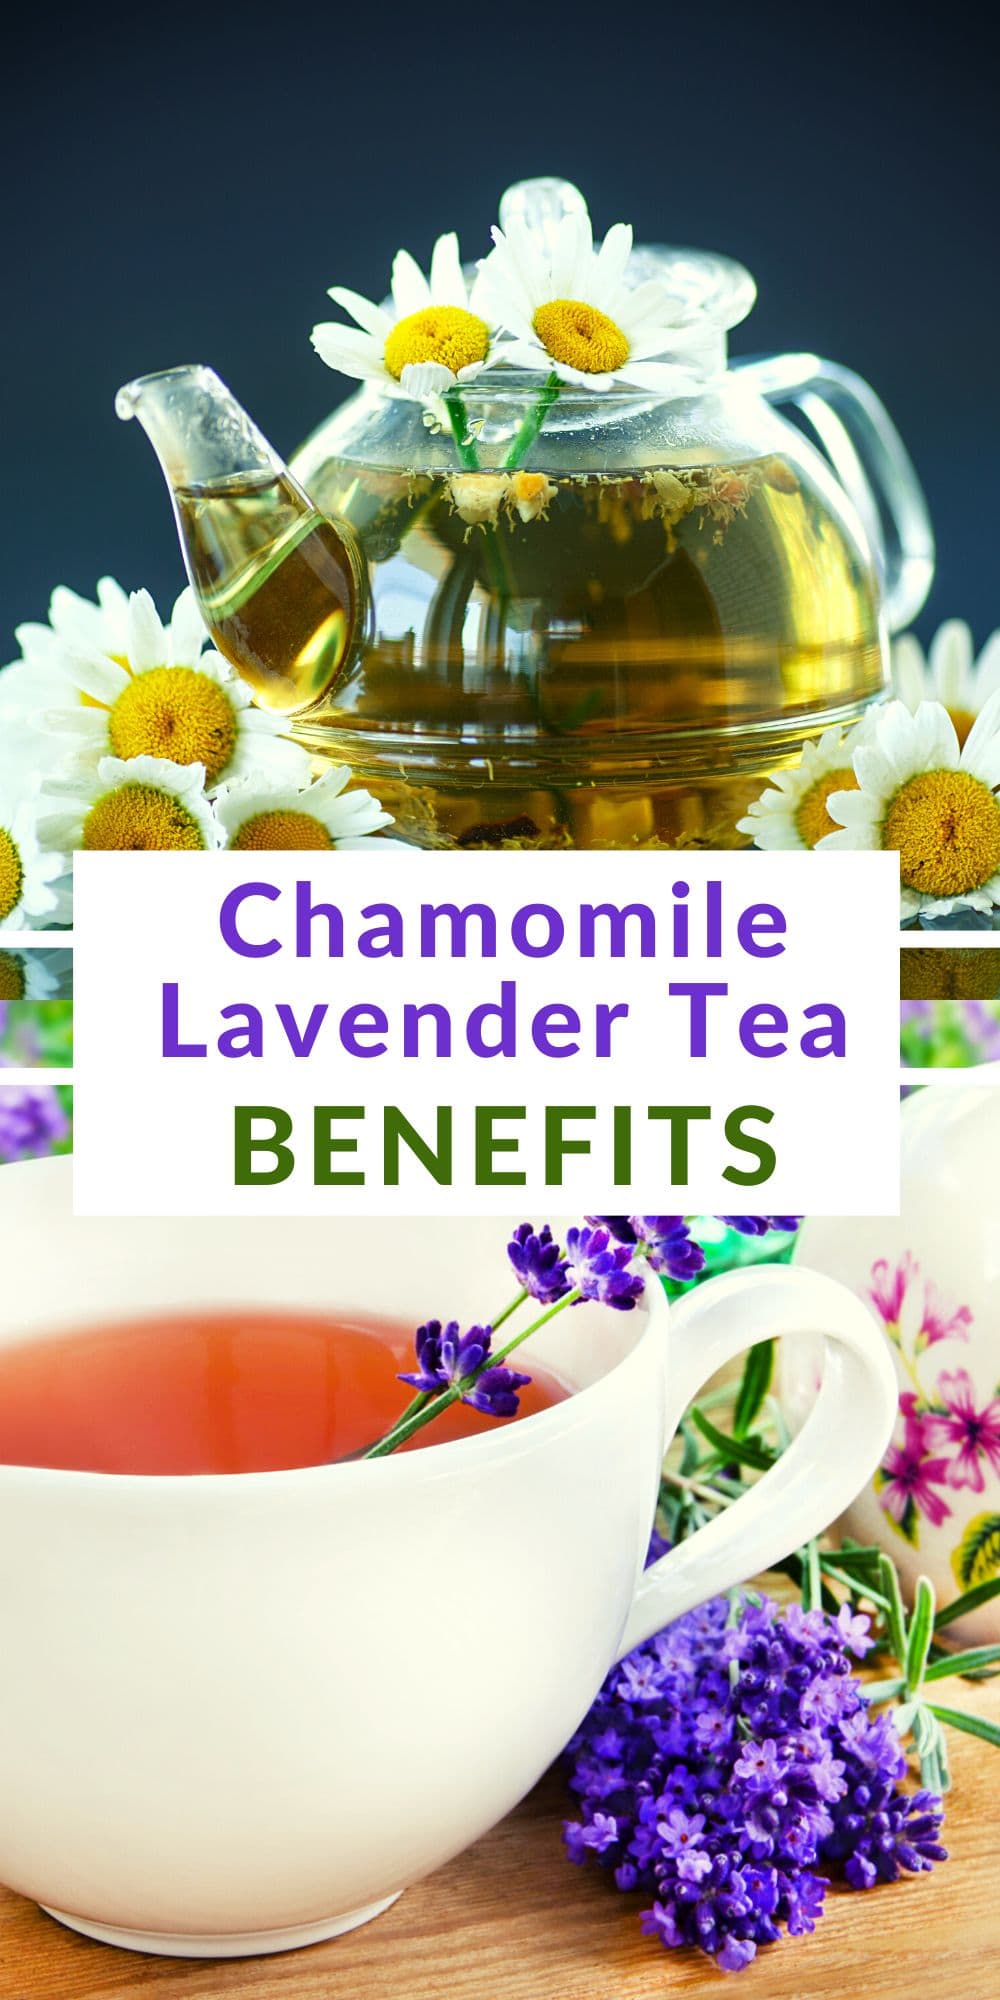 Chamomile Lavender Tea Benefits